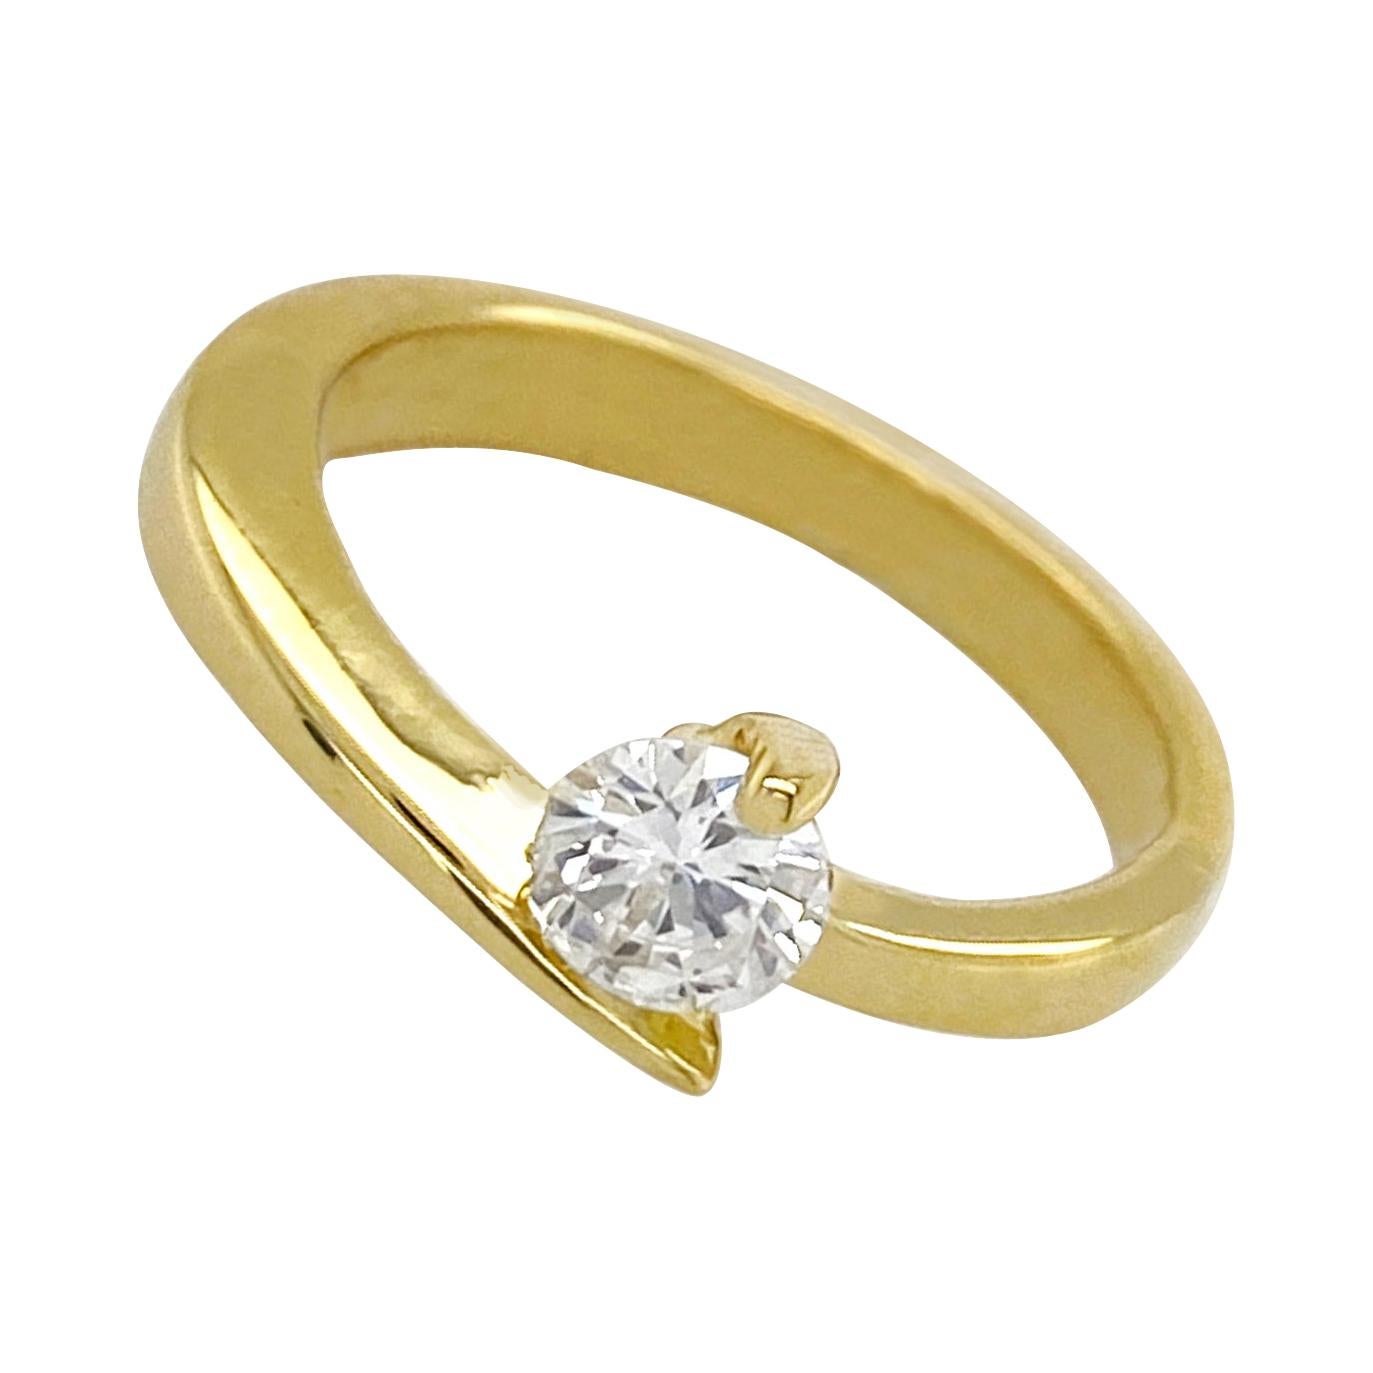 Certified 0.36 Carat Diamond Set in 18 Karat Yellow Gold "Comet" Solitaire Ring For Sale